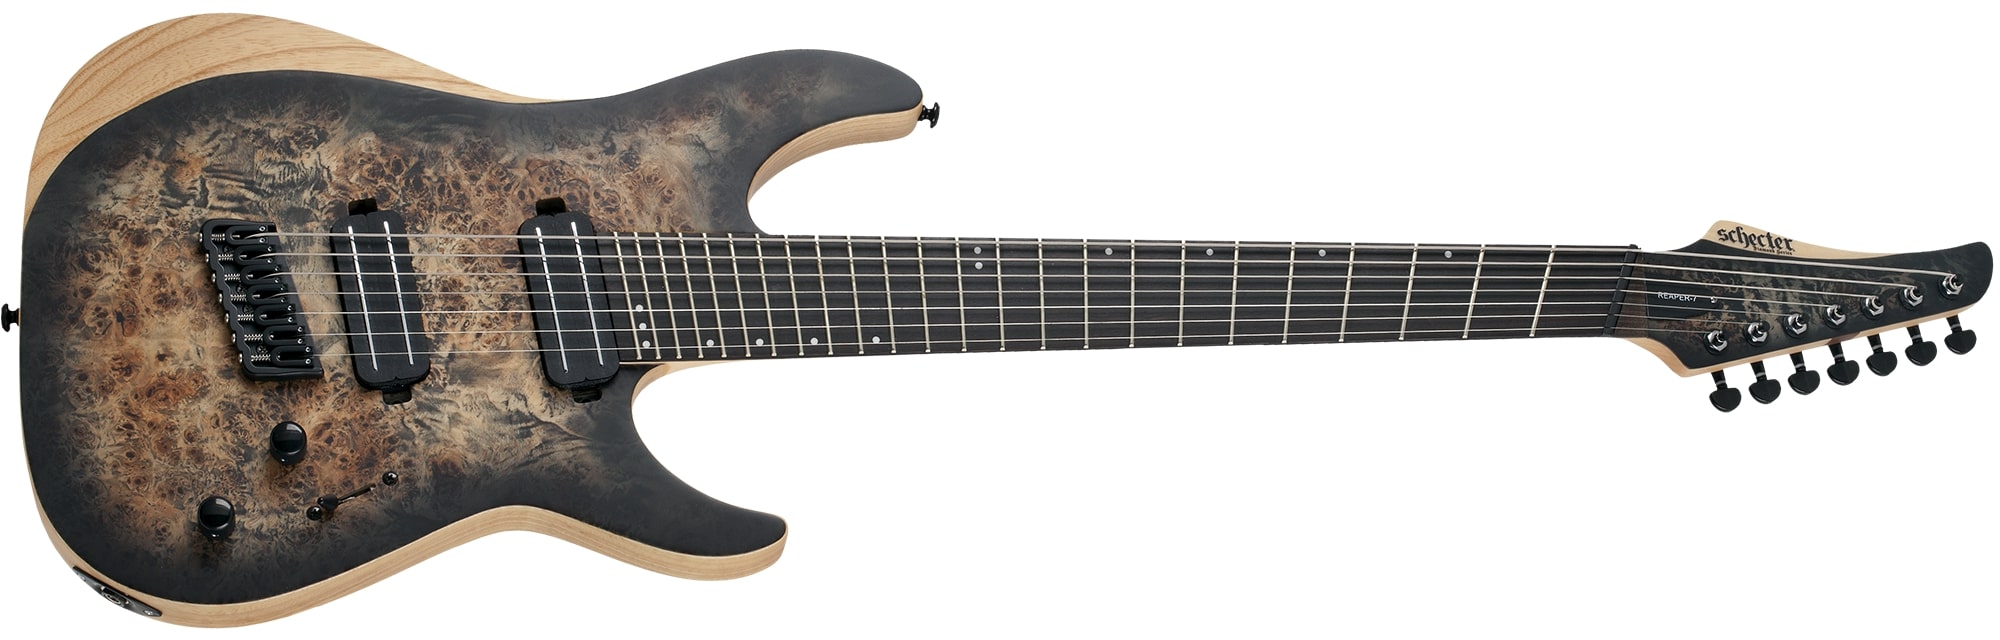 Schecter Reaper-7 Multiscale Electric Guitar in Charcoal Burst 1509-SHC